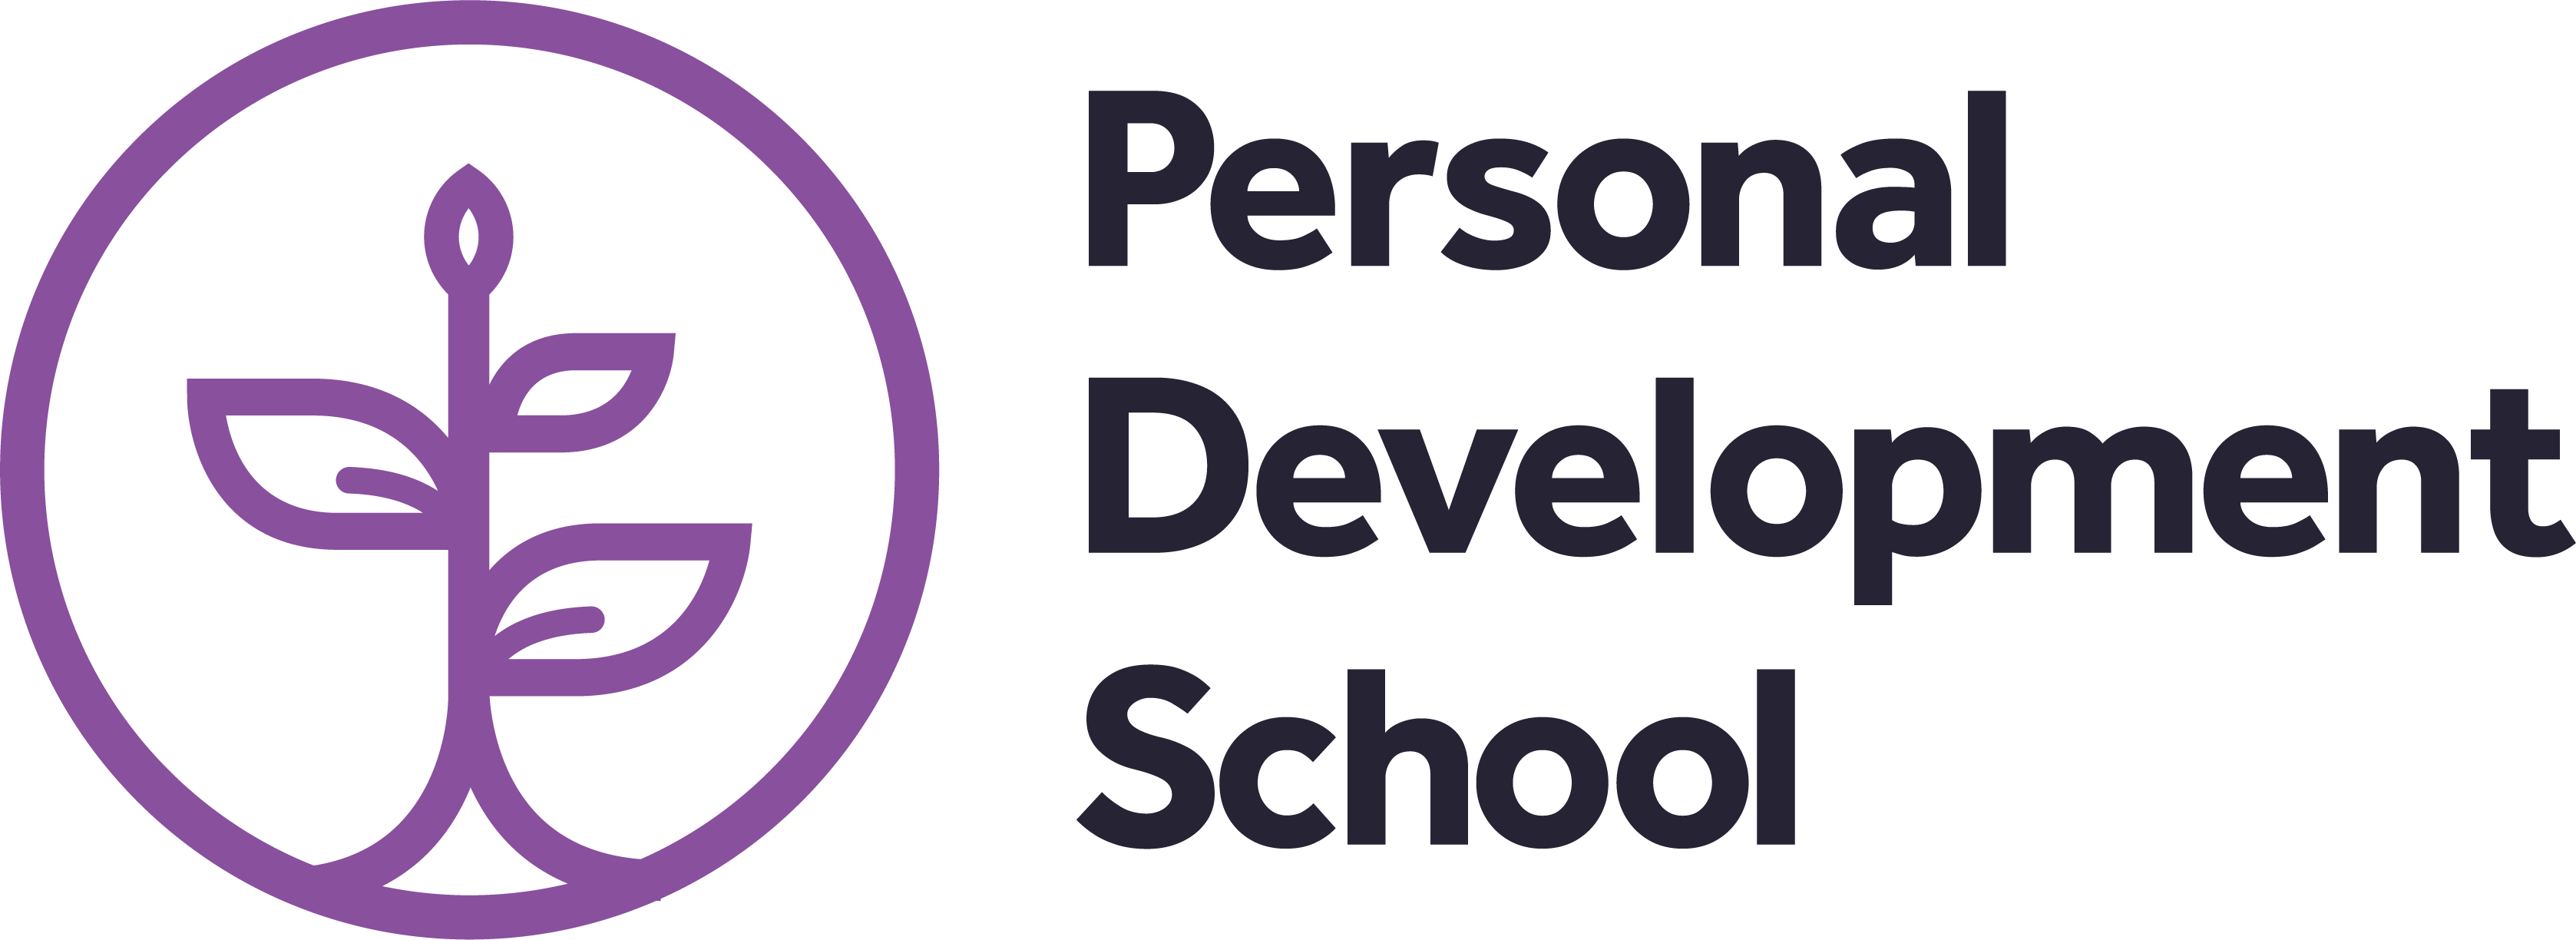 The Personal Development School 